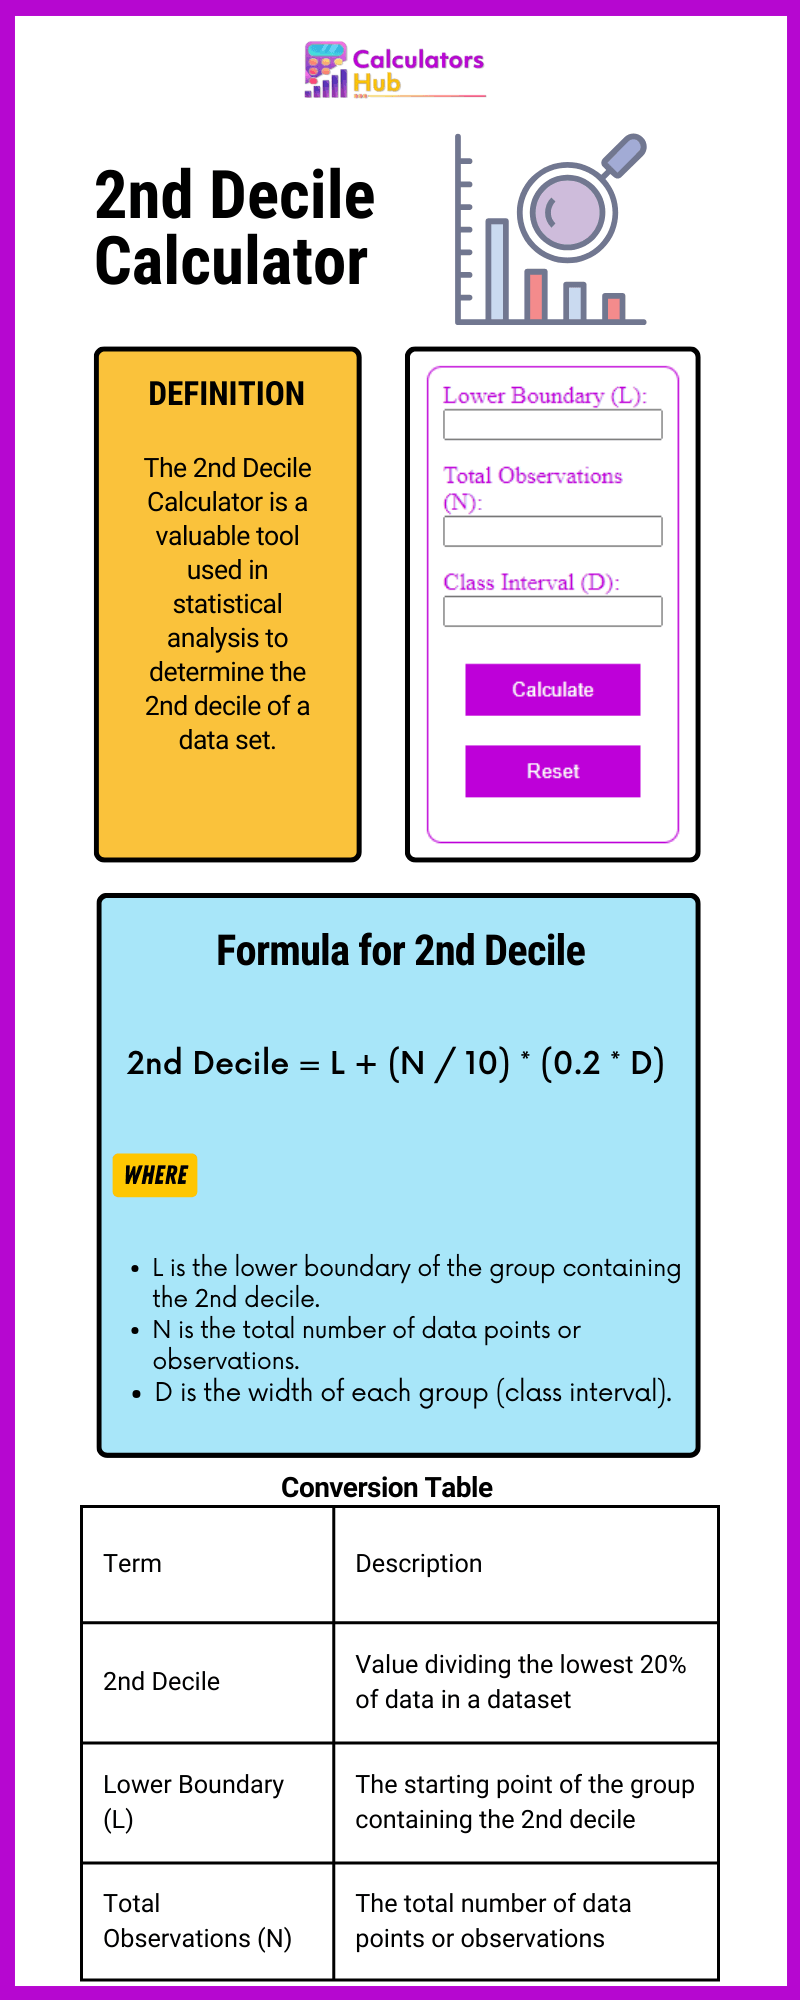 2nd Decile Calculator